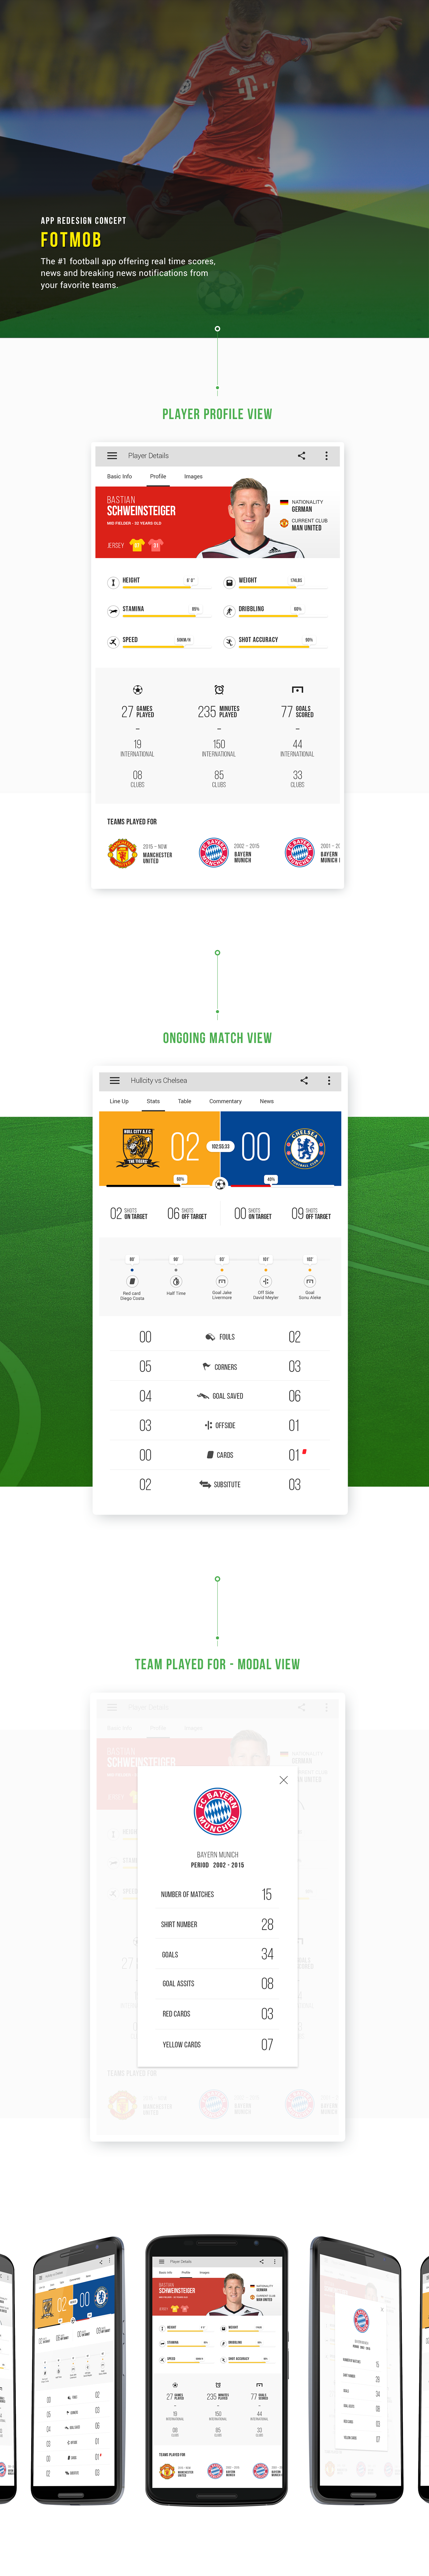 Mobile app user interface design football Sports App redesign